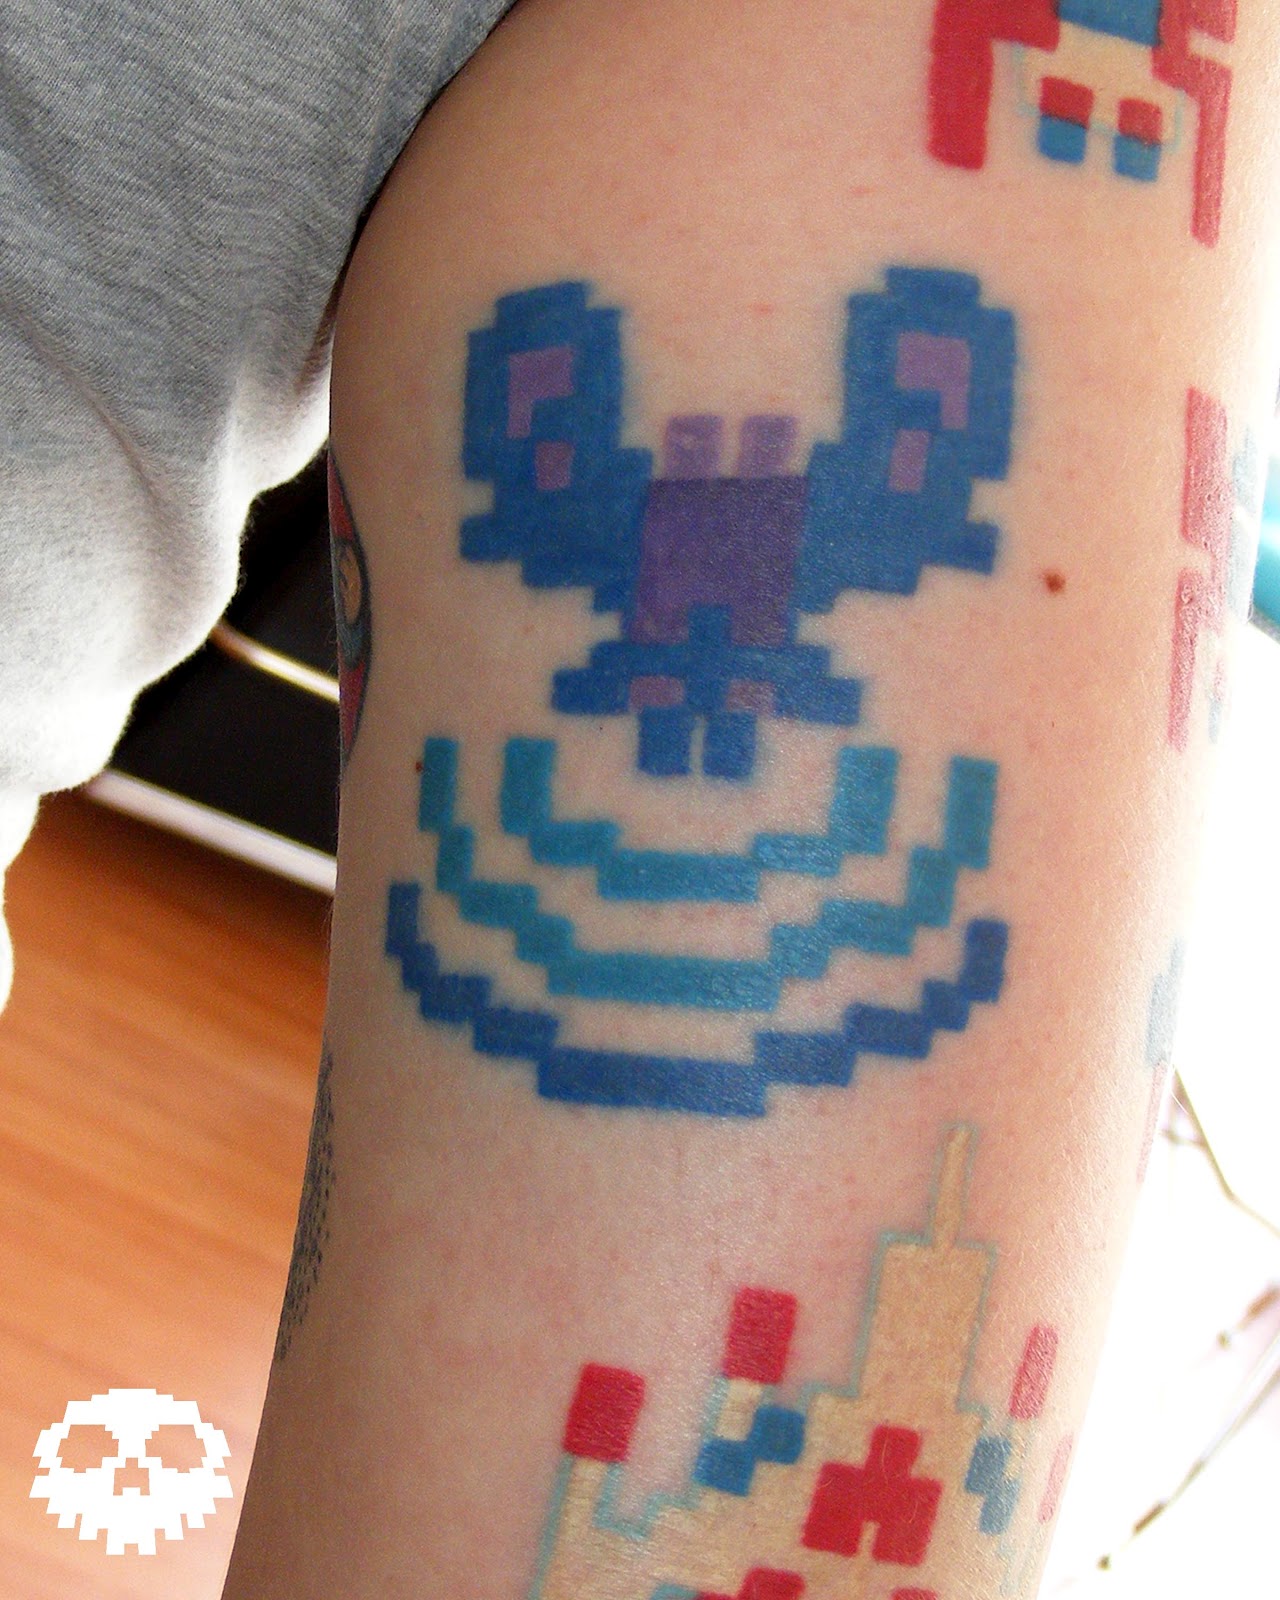 to the Artisanal Tattoo Blog! Video Game Tattoos